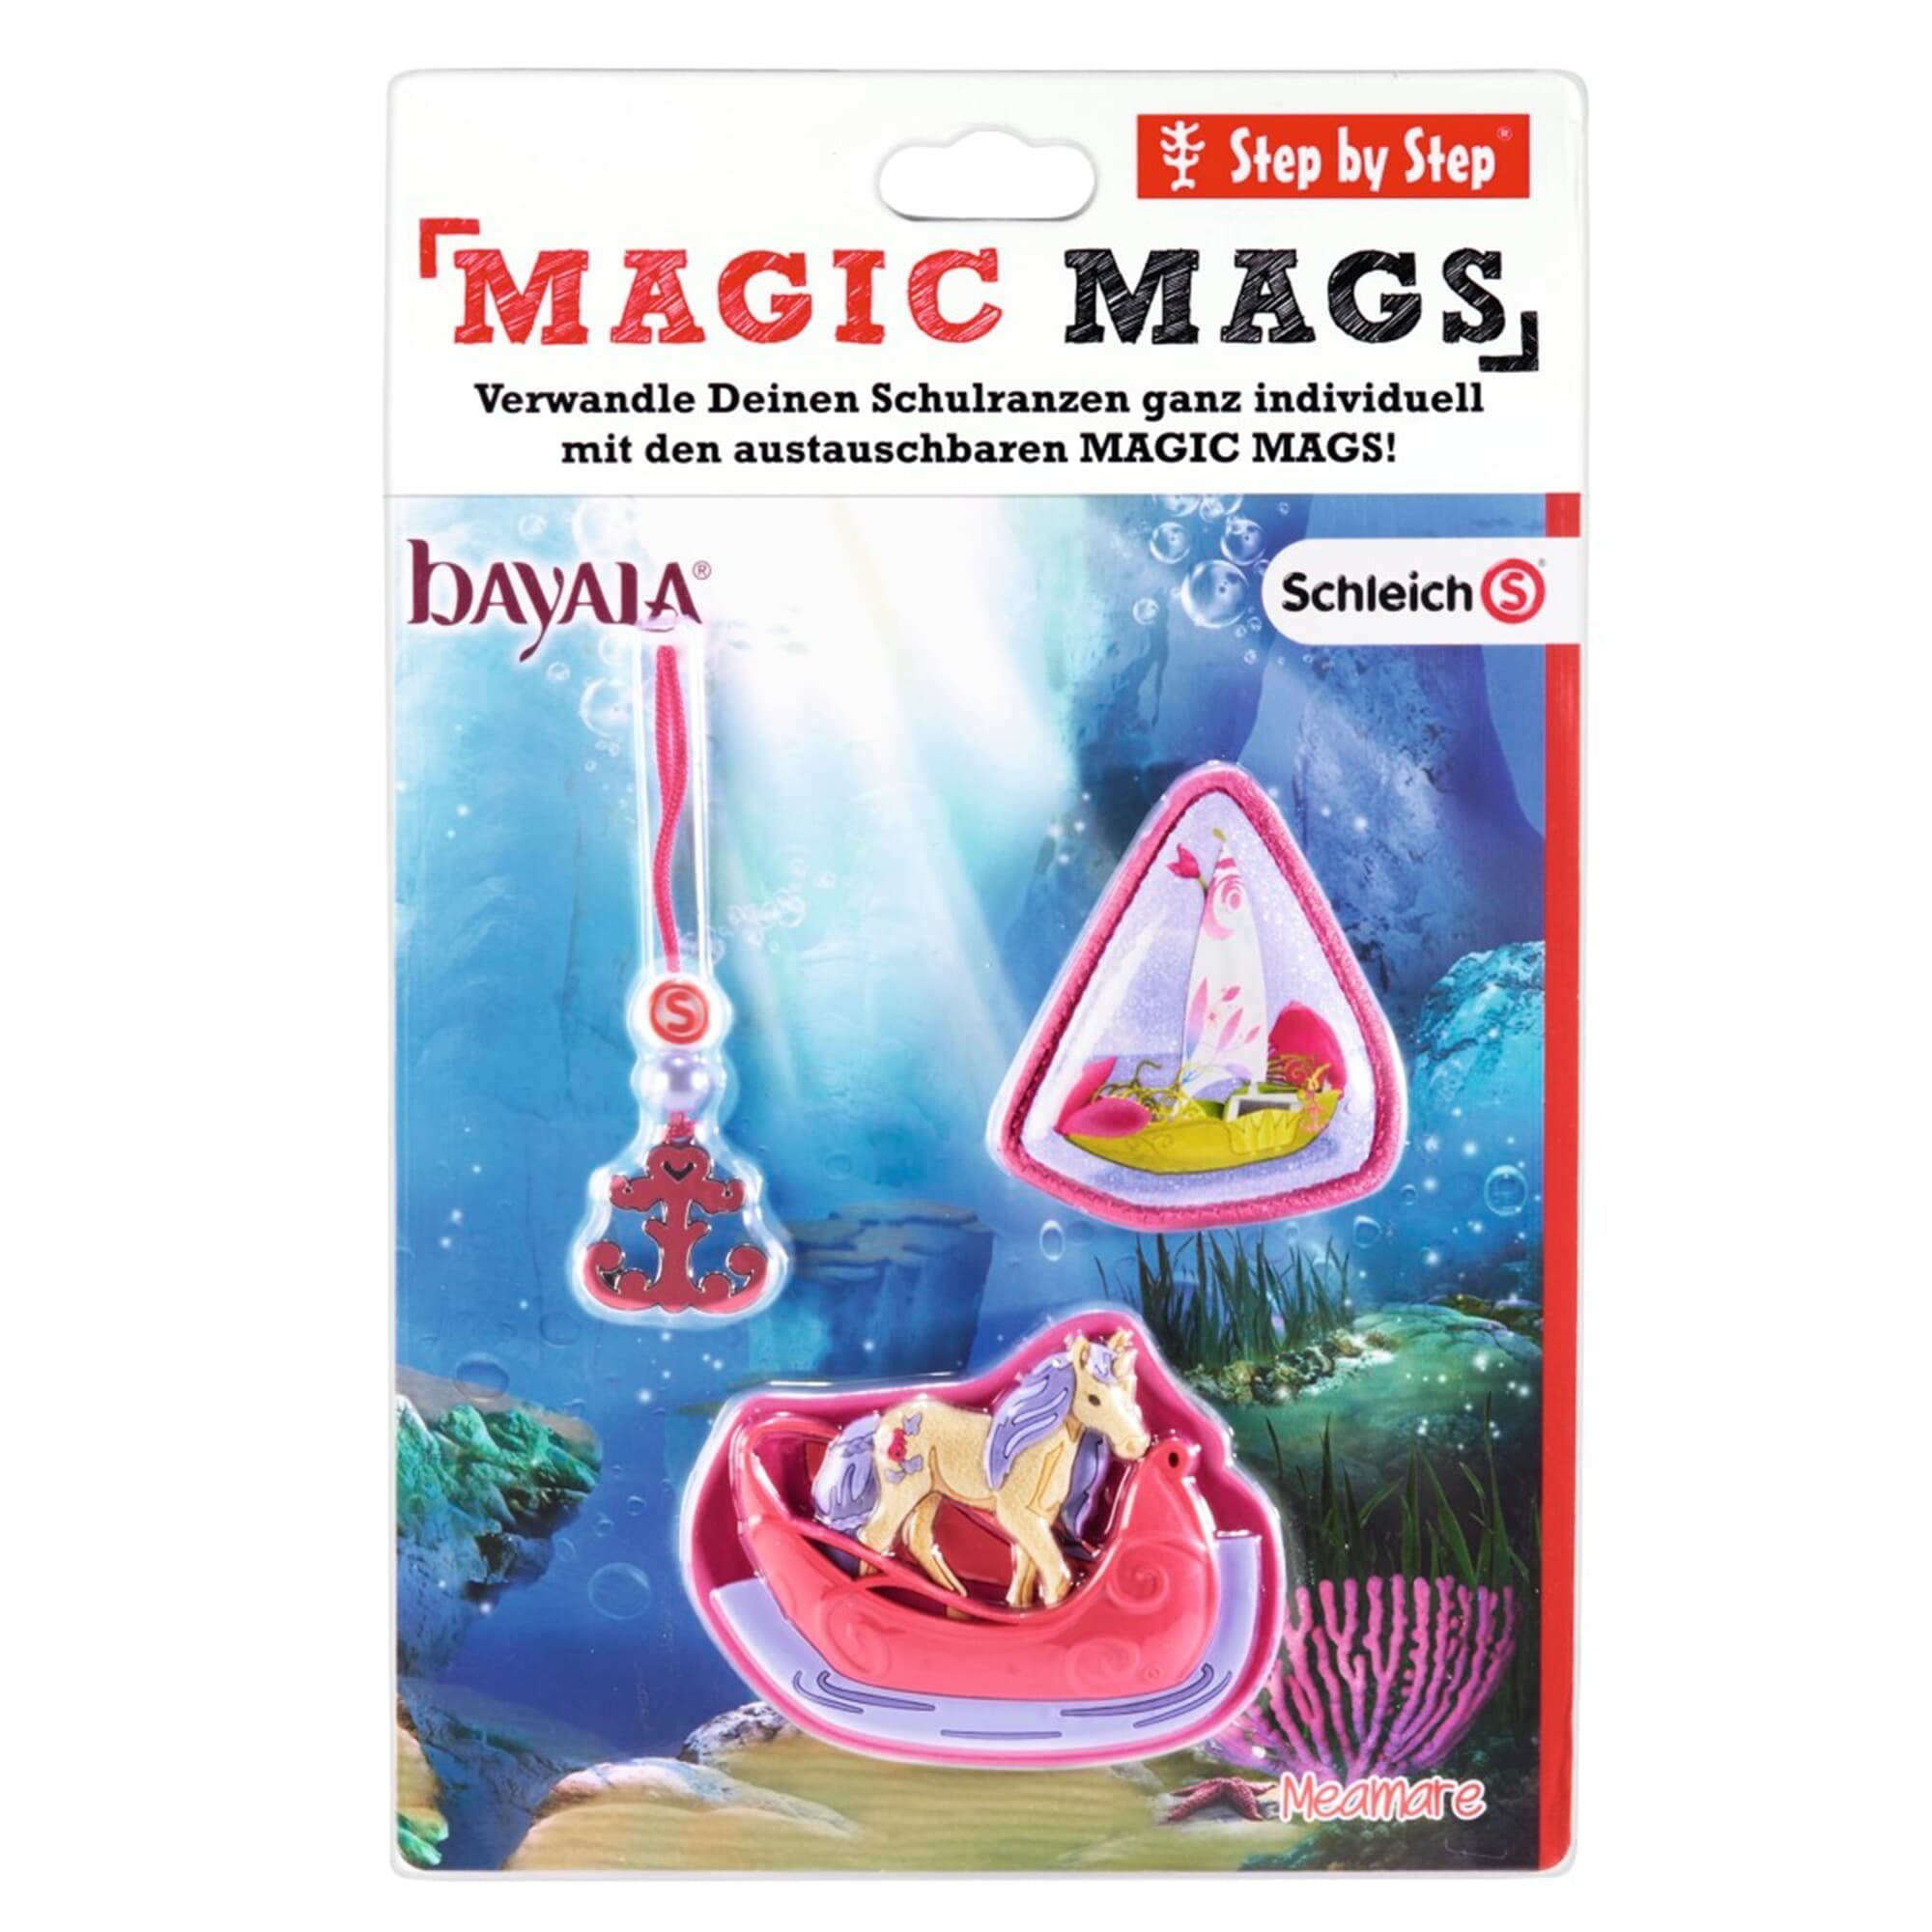 MAGIC Step bayala®, MAGS Schulranzen by Meamare Step